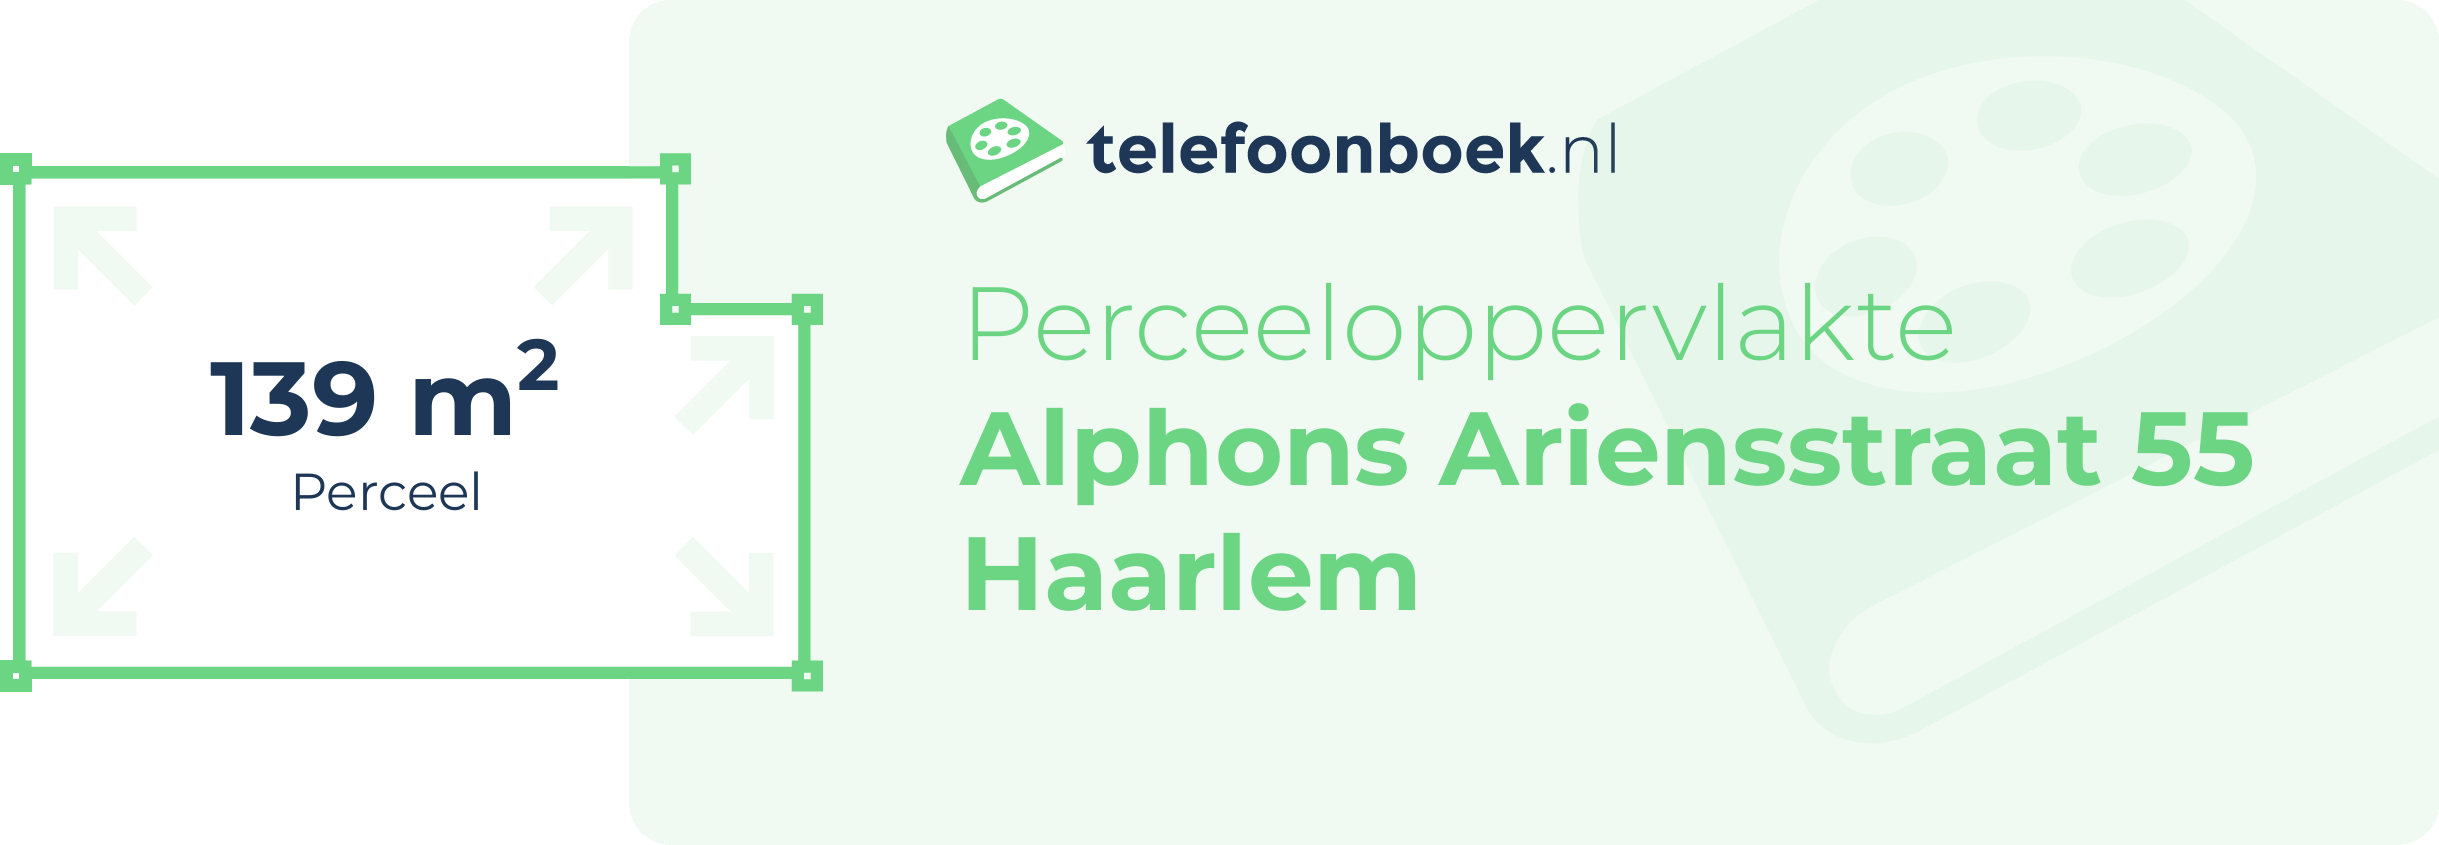 Perceeloppervlakte Alphons Ariensstraat 55 Haarlem